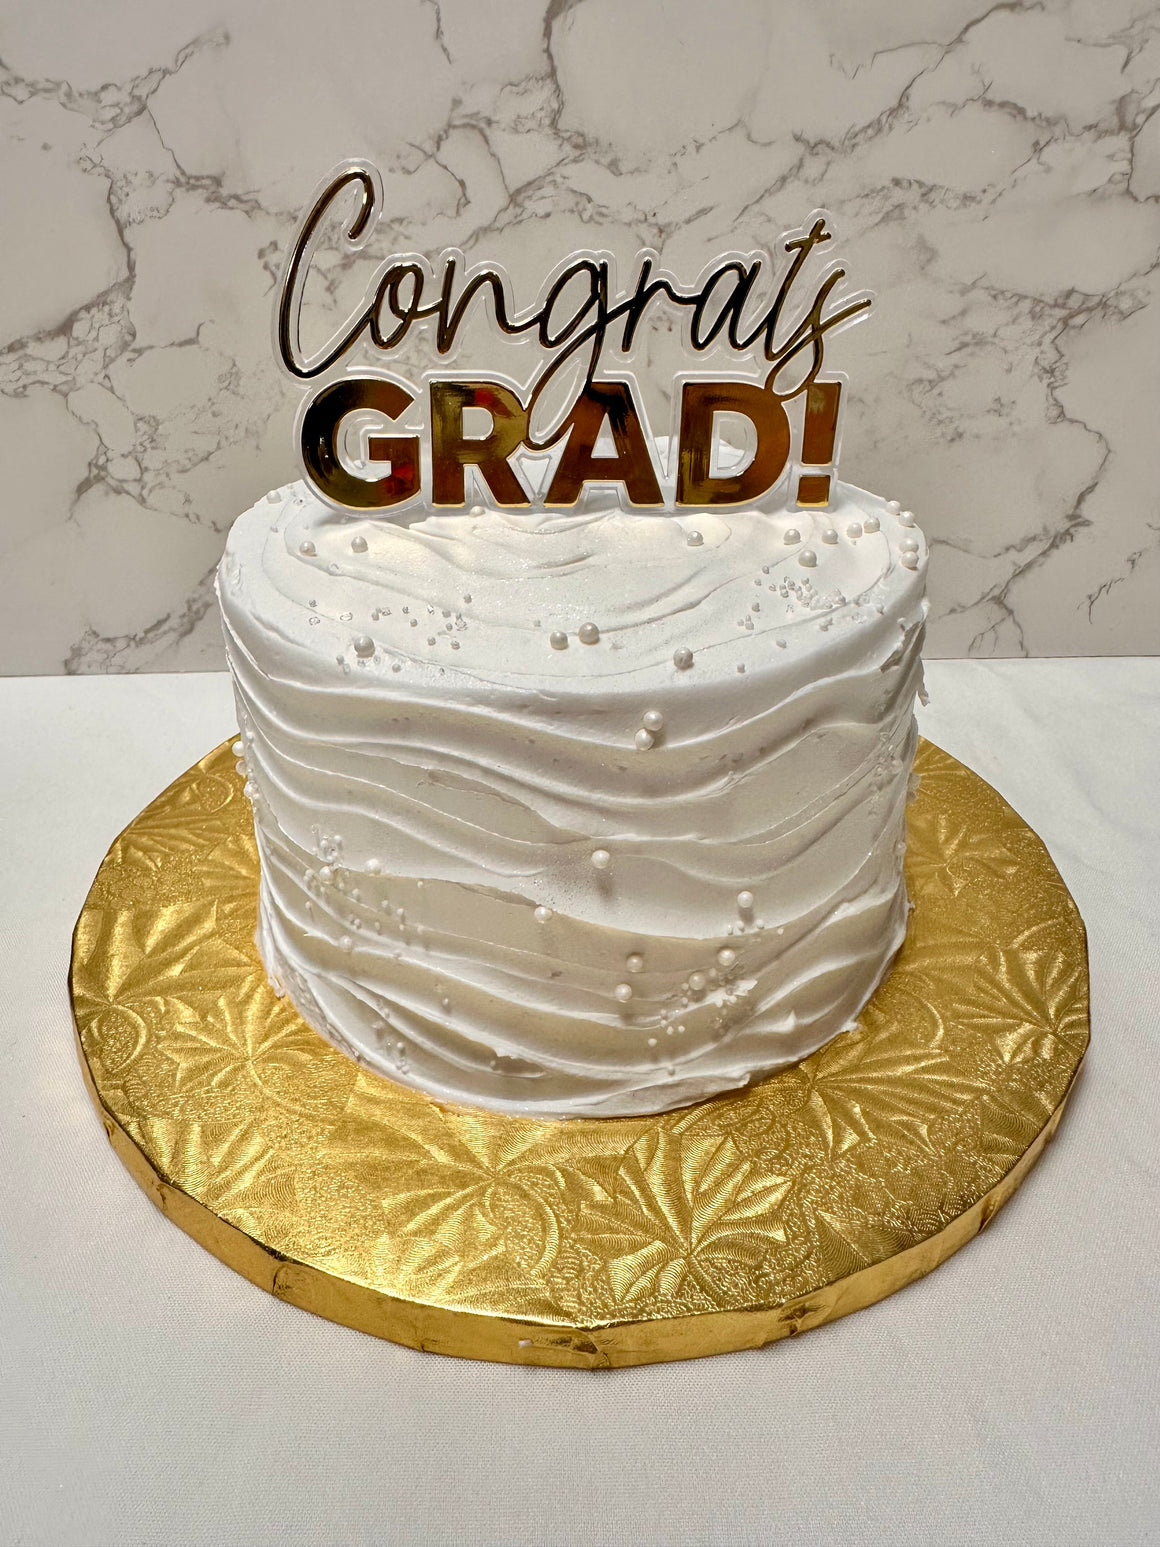 6" Wavy Pearl Congrats Grad Cake